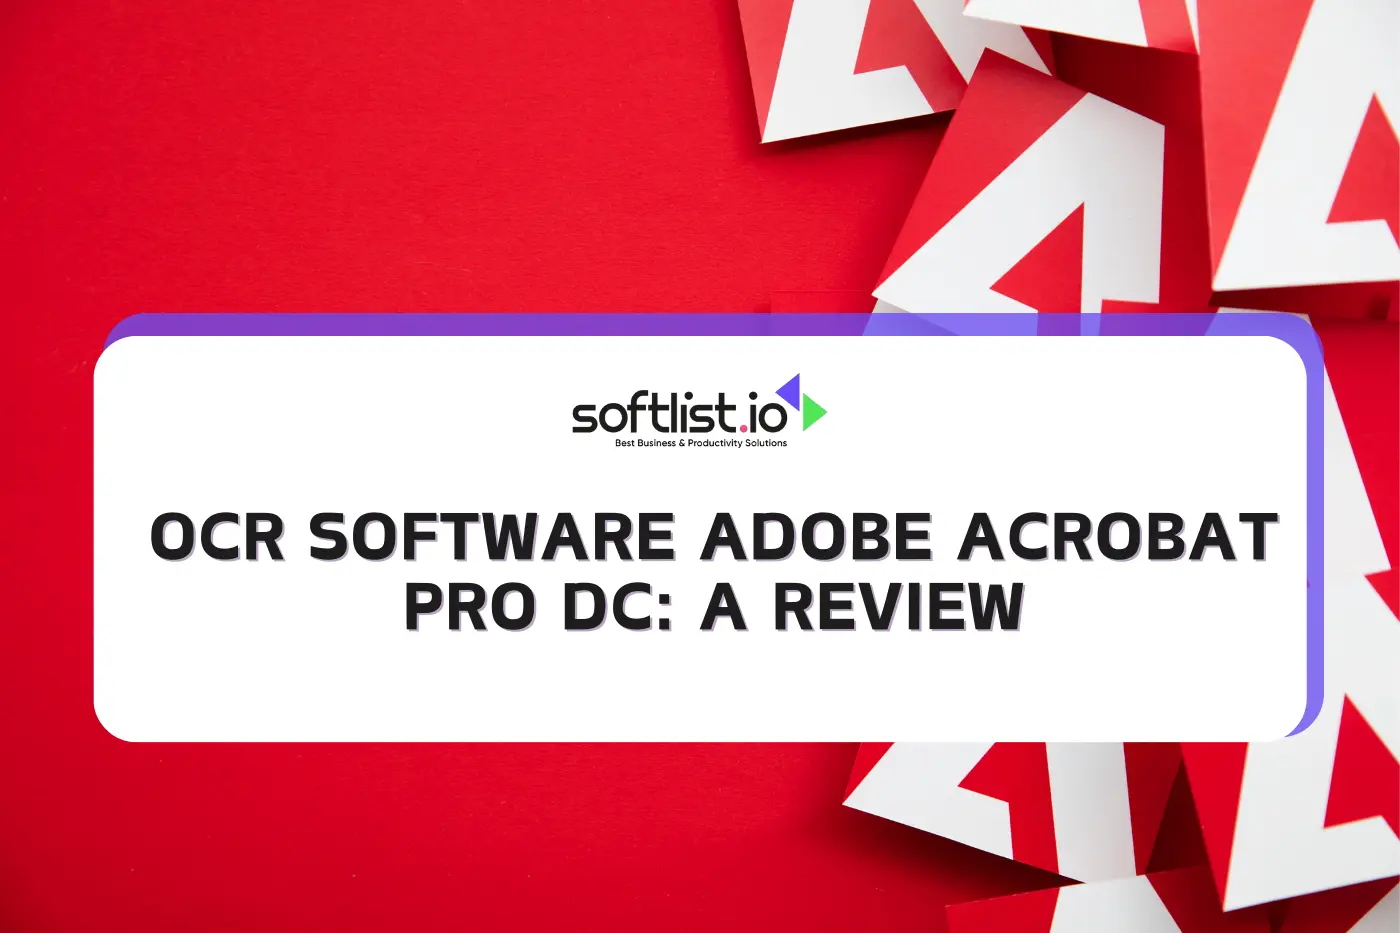 OCR Software Adobe Acrobat Pro DC: A Review